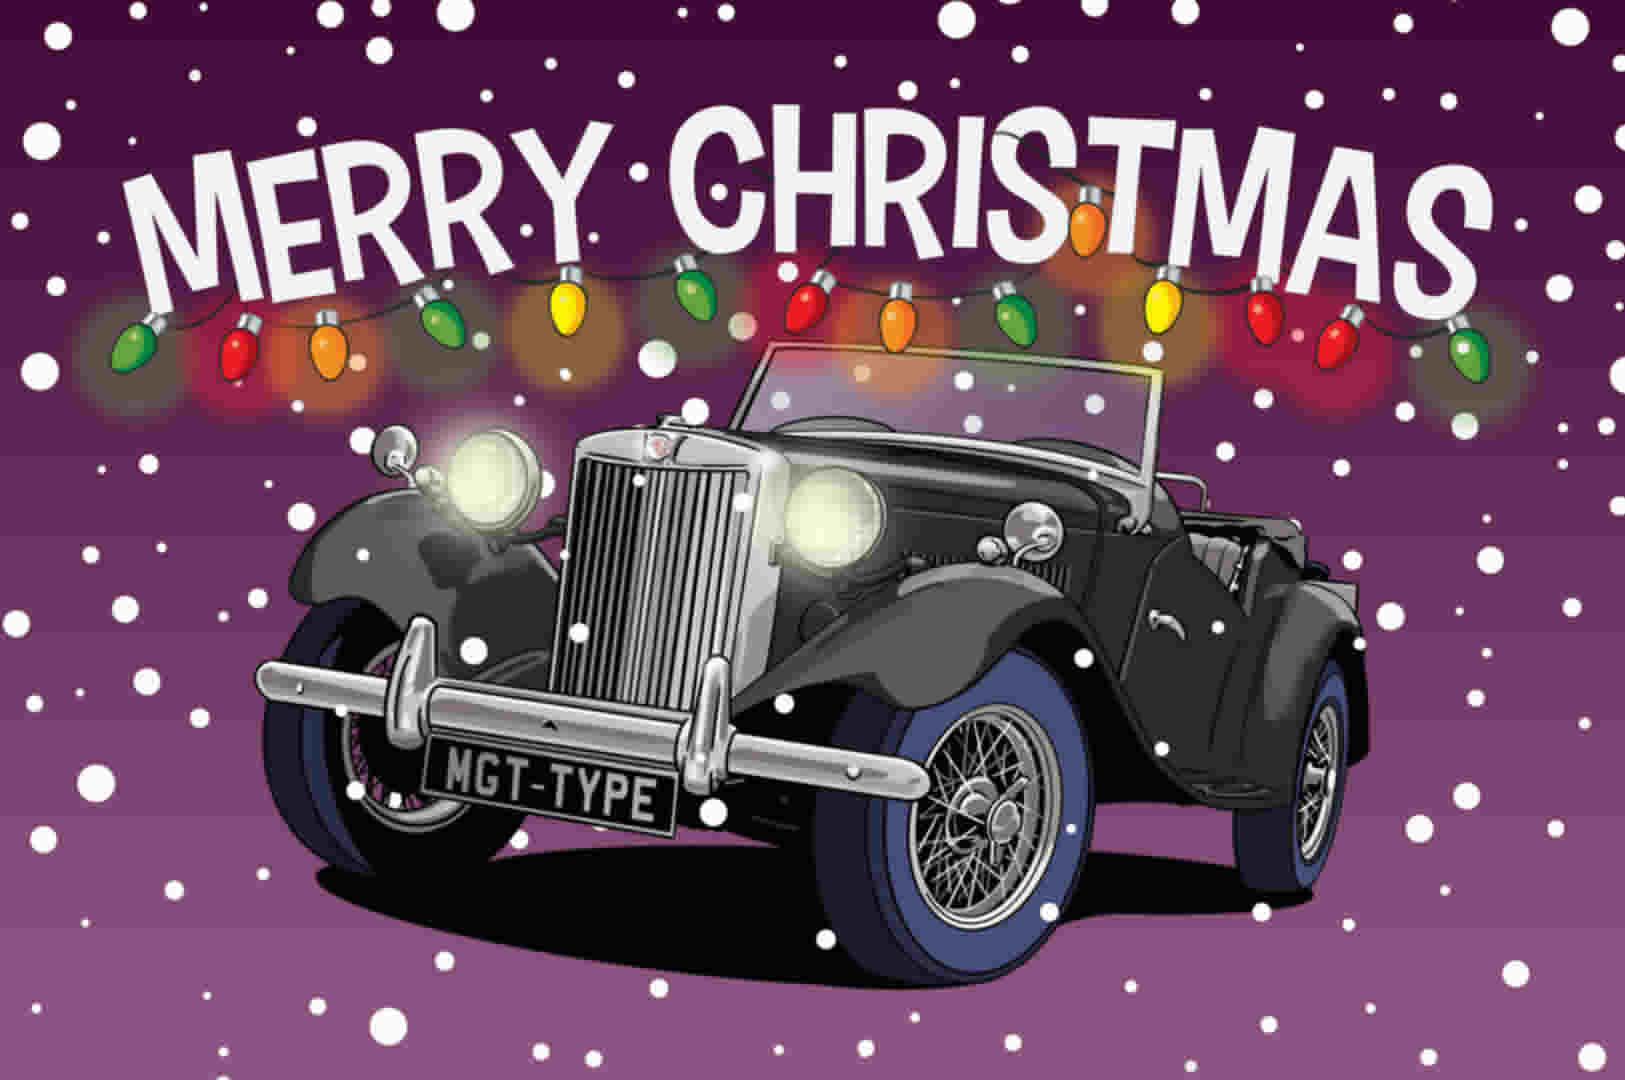 Black MG T-type vintage car Christmas Card